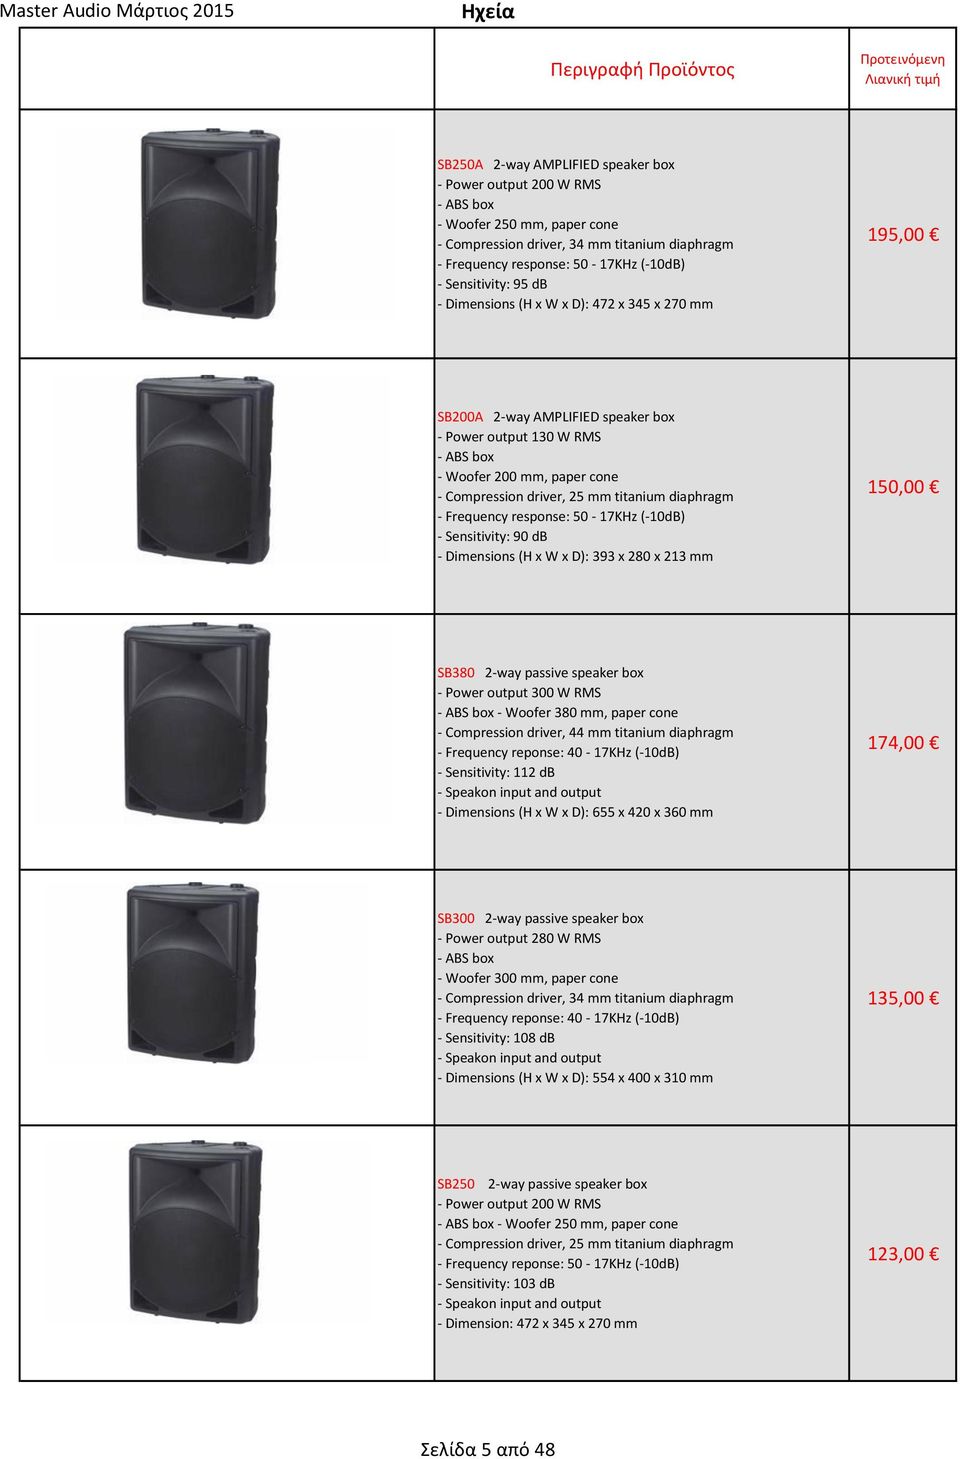 titanium diaphragm - Frequency response: 50-17KHz (-10dB) - Sensitivity: 90 db - Dimensions (H x W x D): 393 x 280 x 213 mm 150,00 SB380 2-way passive speaker box - Power output 300 W RMS - ABS box -